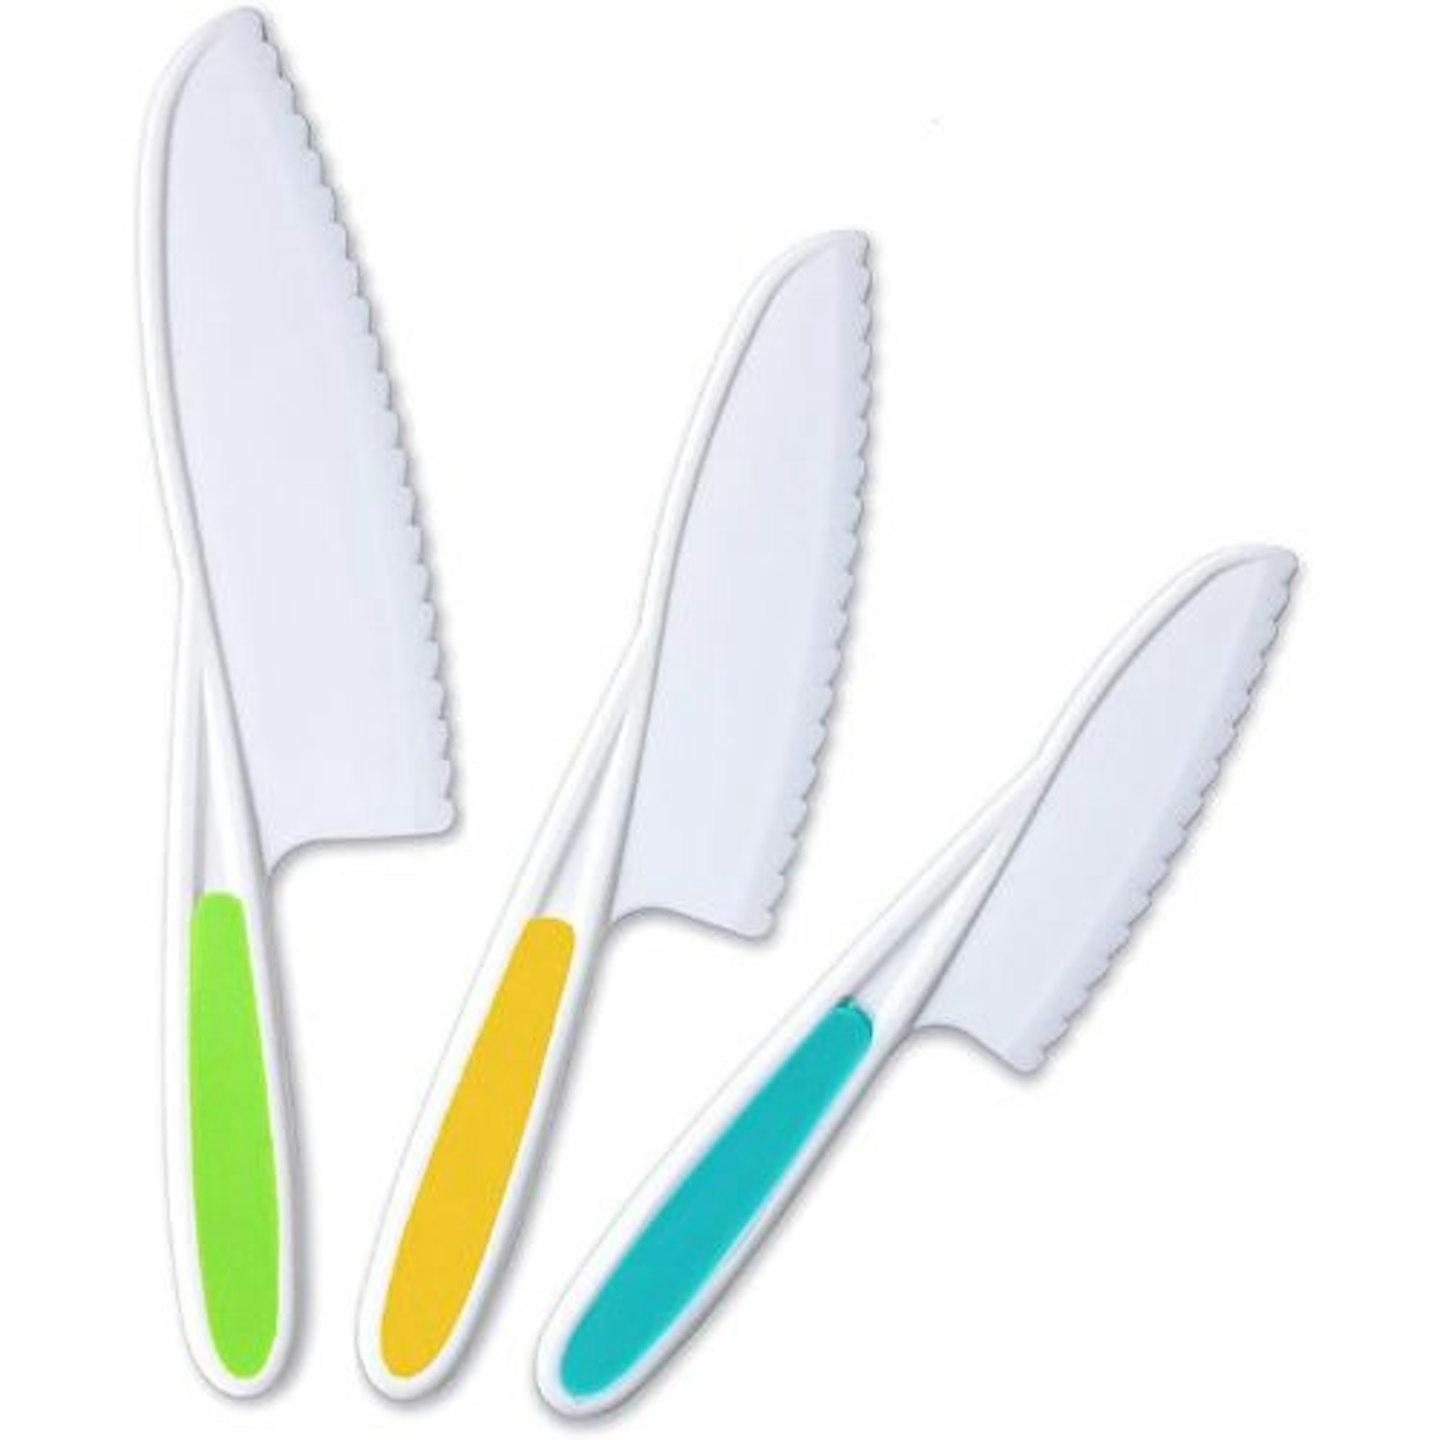 Best toddler kitchen knives Jatidne Toddler Knife for Chopping Safety